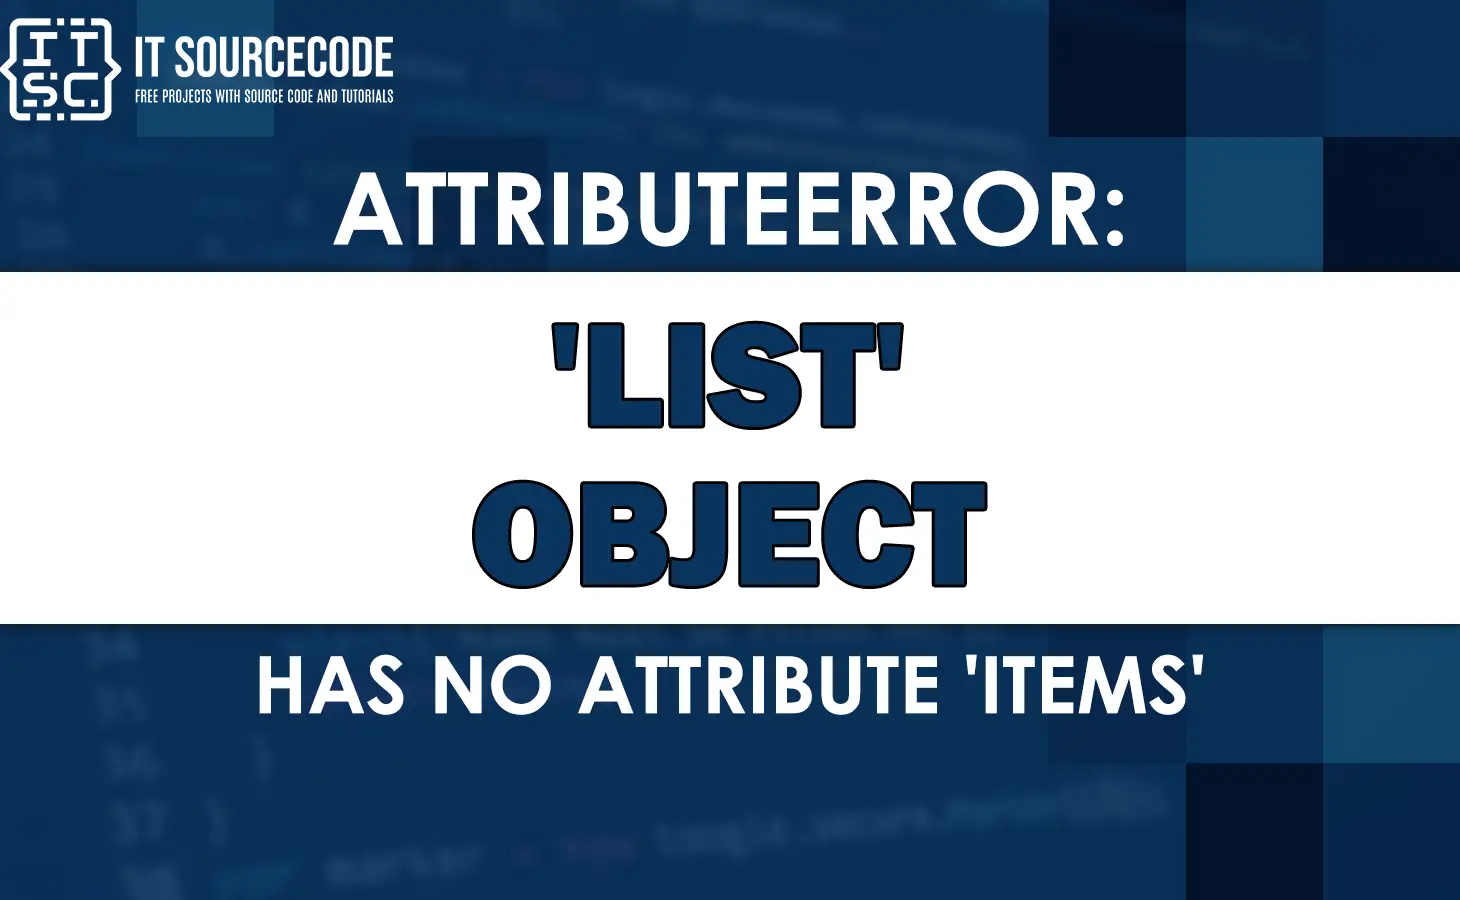 Attributeerror: list object has no attribute items